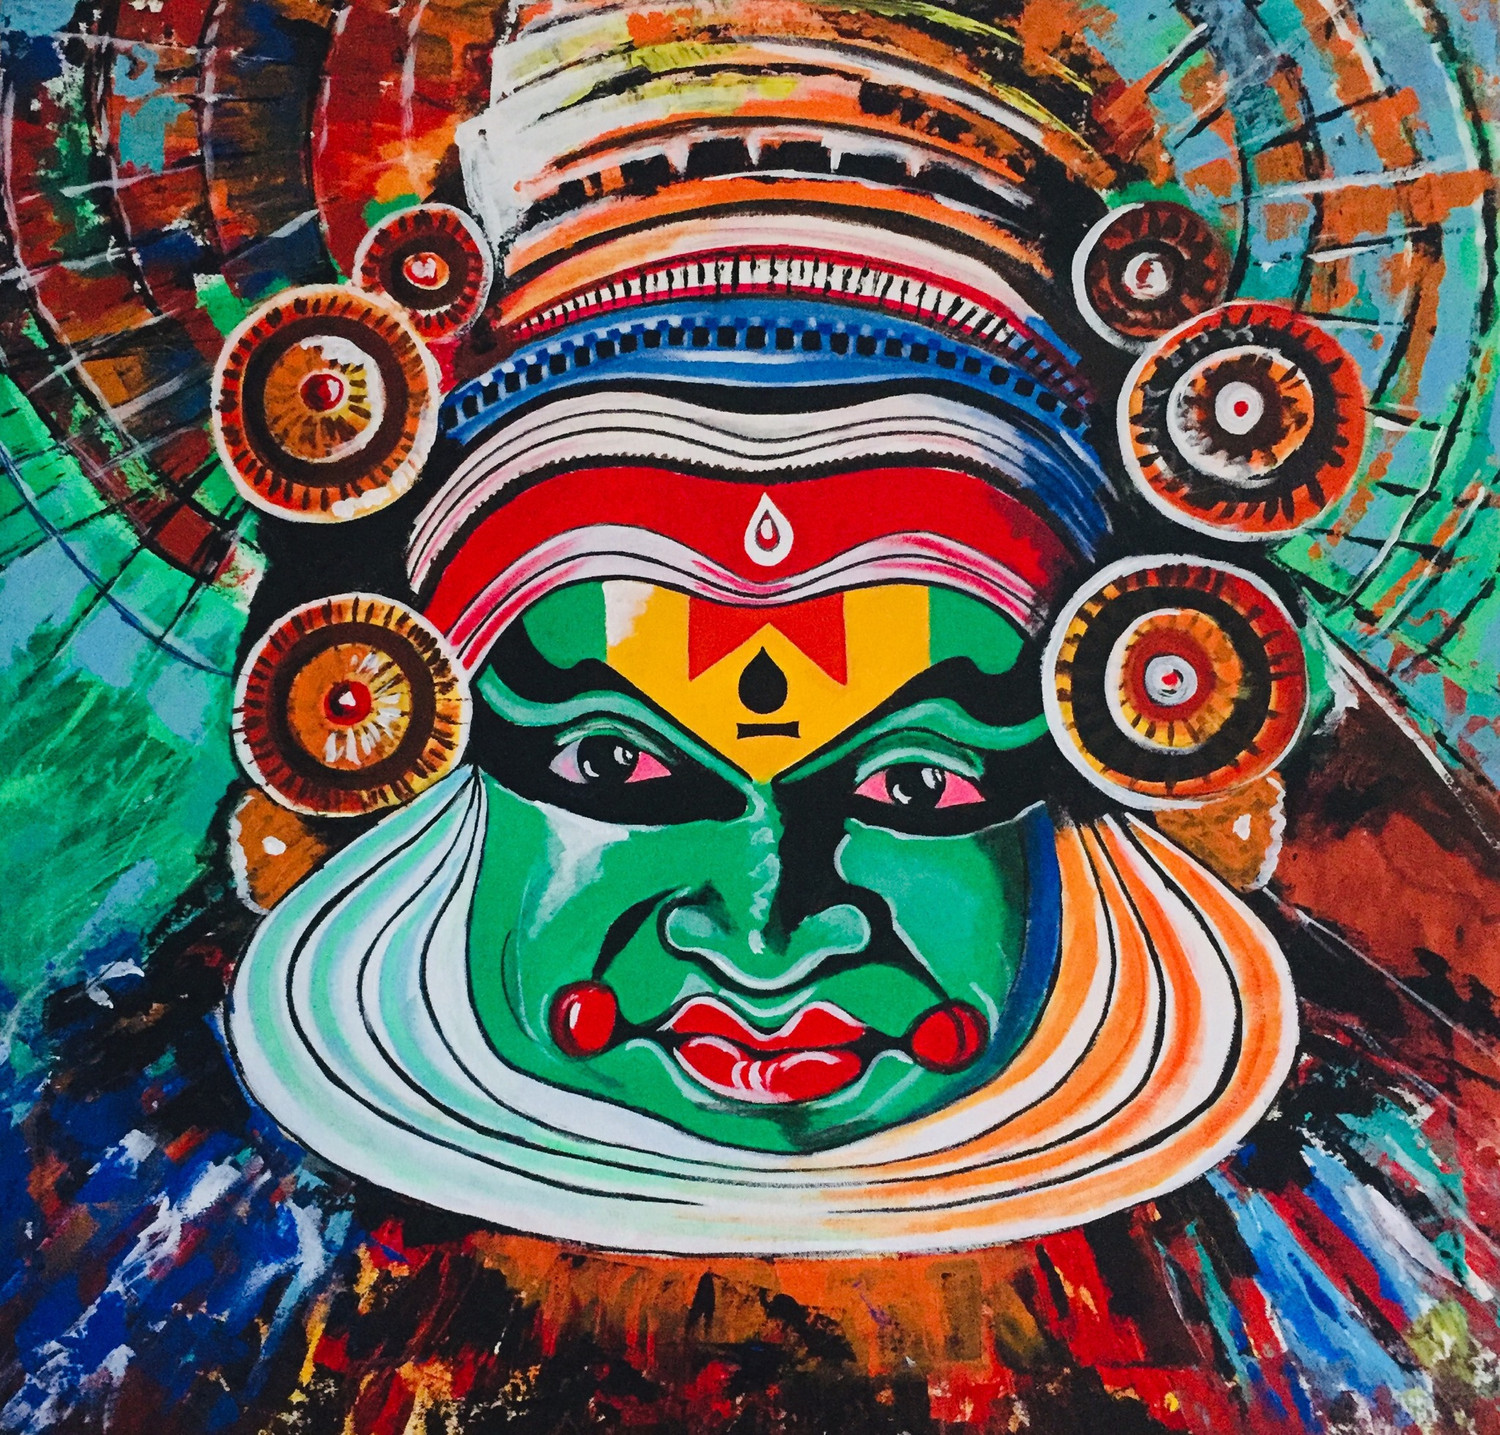 Kathakali by Nanda prakash on Dribbble